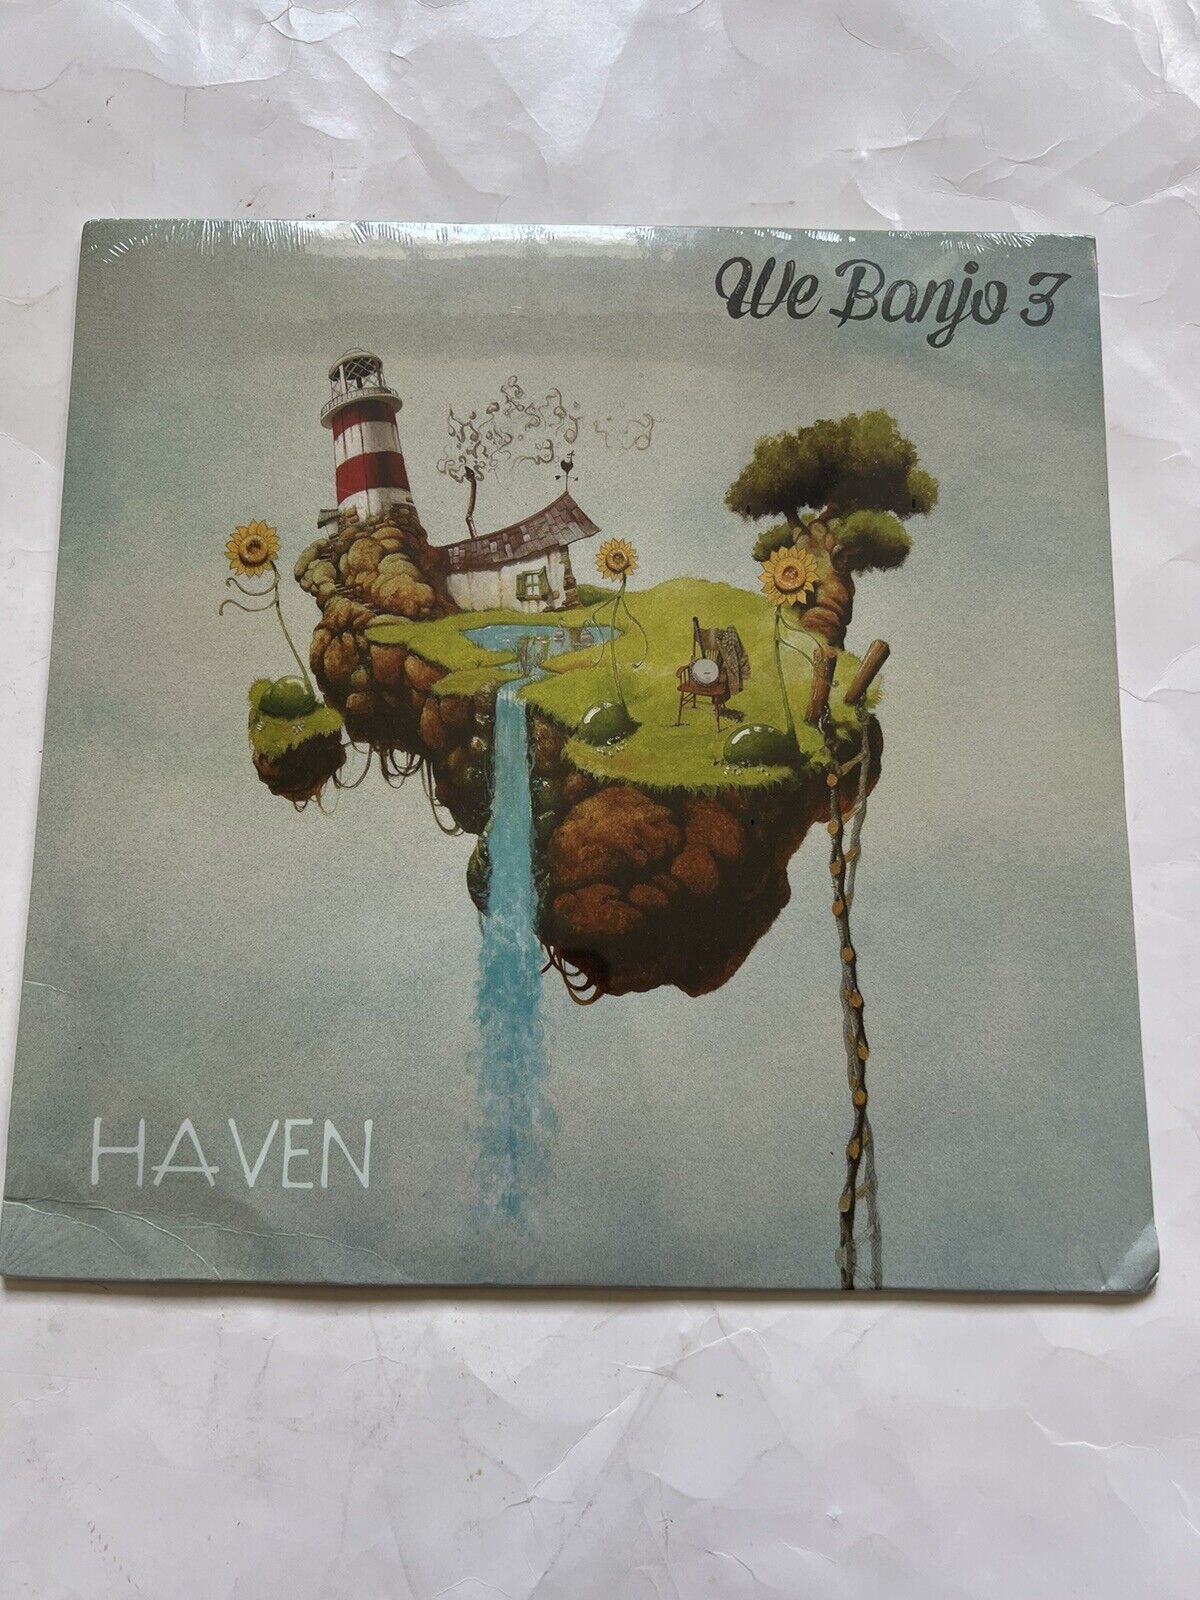 We Banjo 3 Haven Vinyl Record NEW SEALED Minor Sleeve Wear